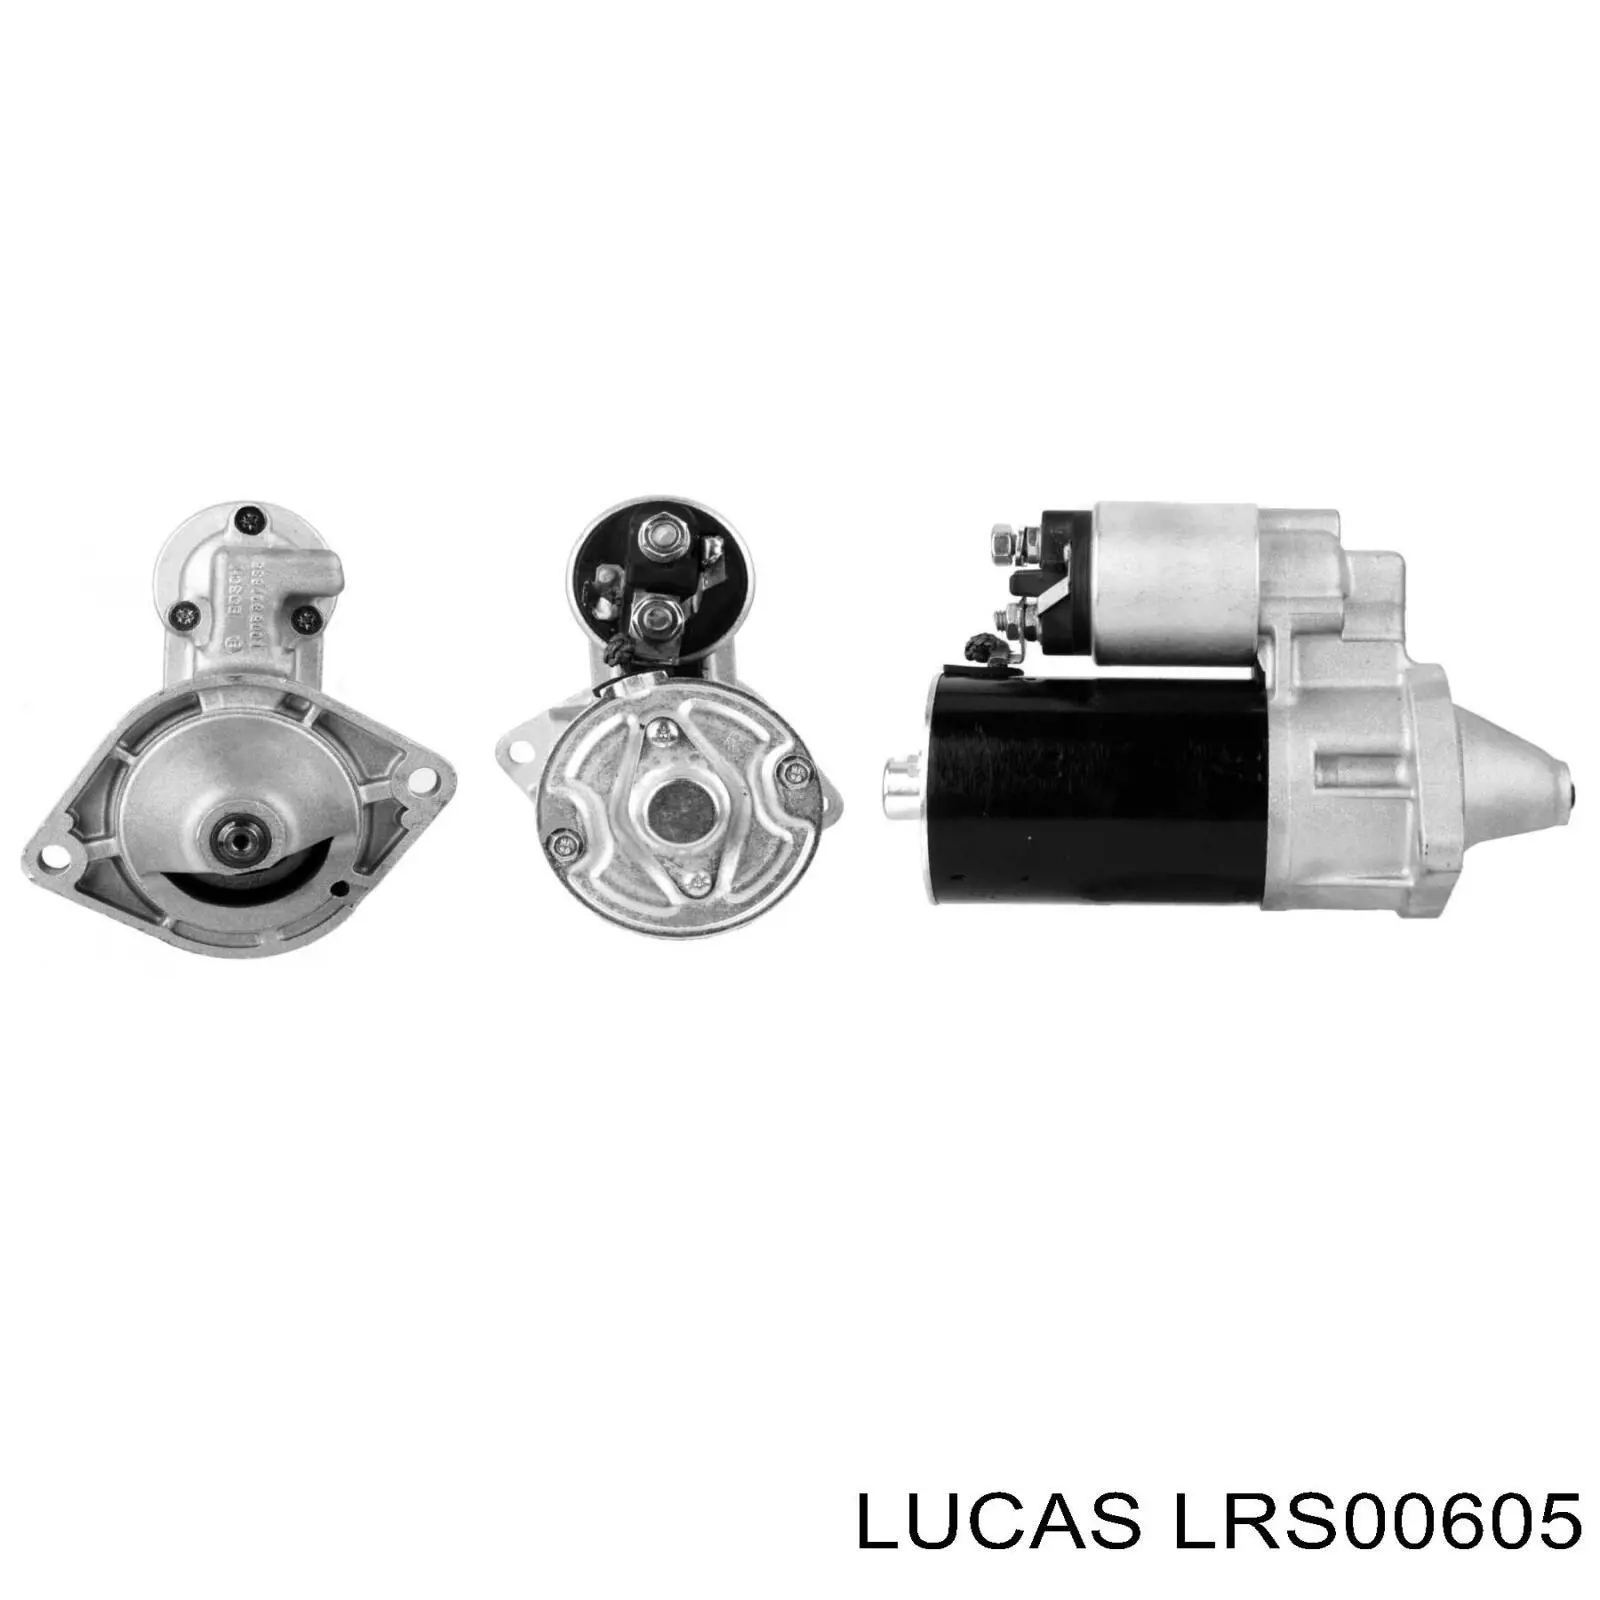 LRS00605 Lucas motor de arranque